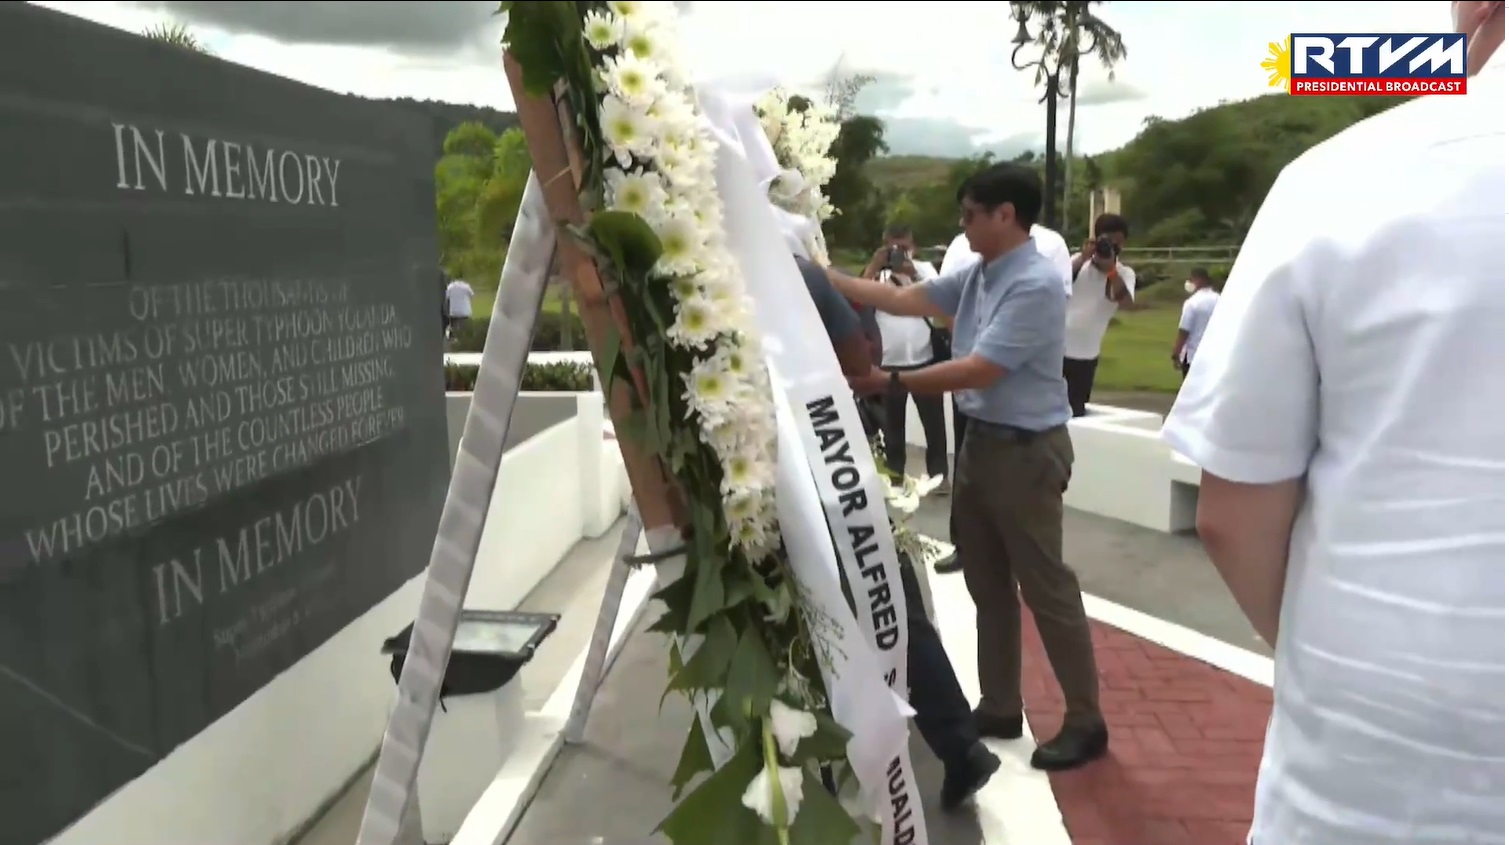 PBBM commemorates STY ‘Yolanda’ victims, survivors